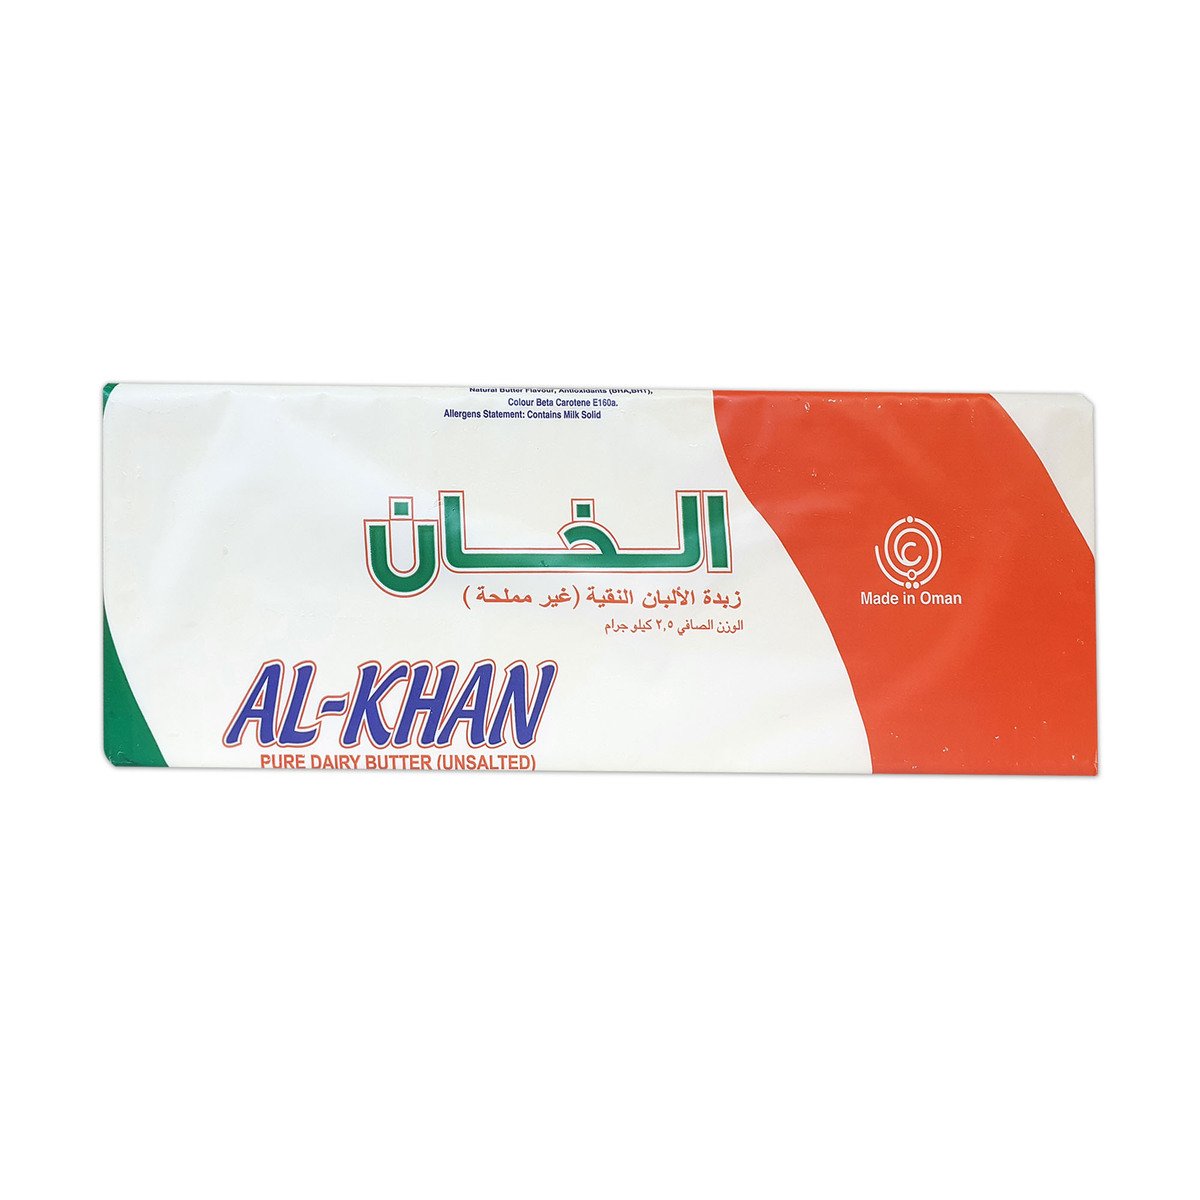 Al Khan Unsalted Pure Dairy Butter 2.5kg